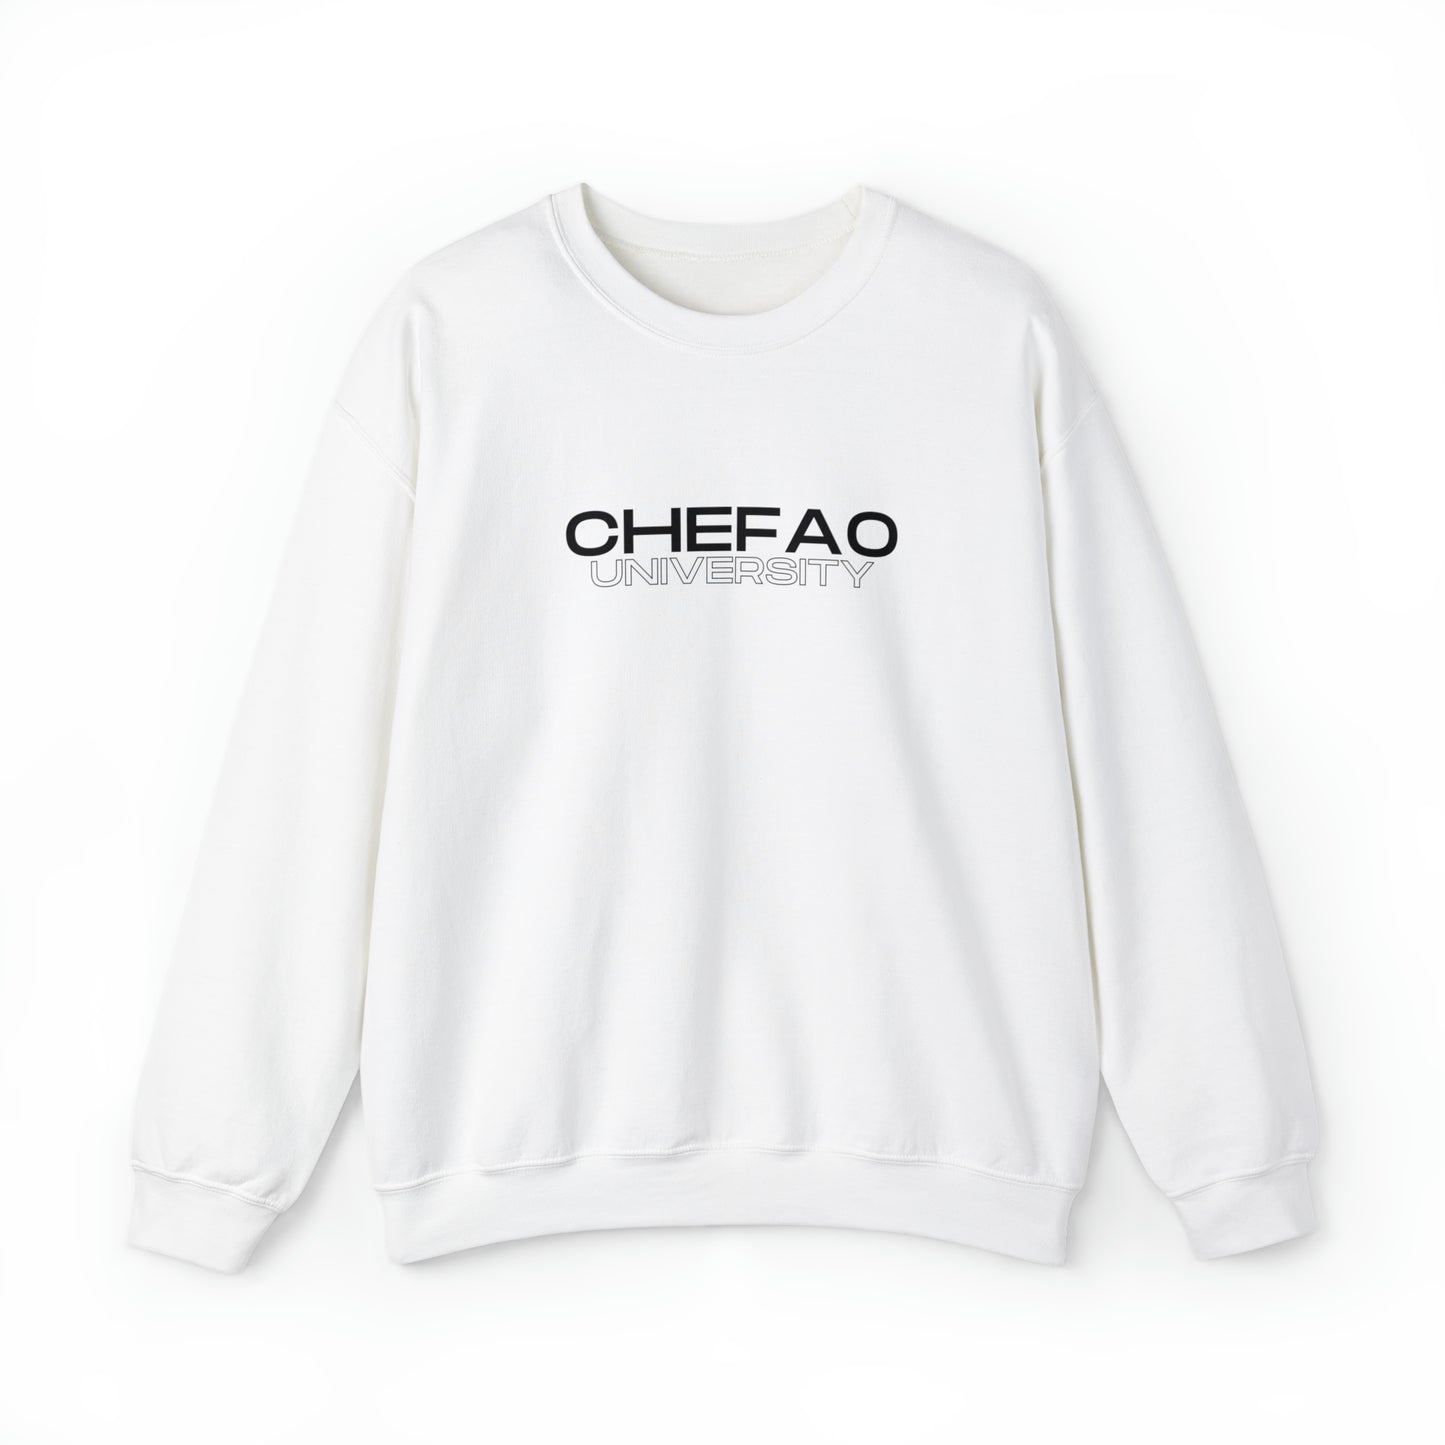 Chefao University I, Unisex Heavy Blend Crewneck Sweatshirt